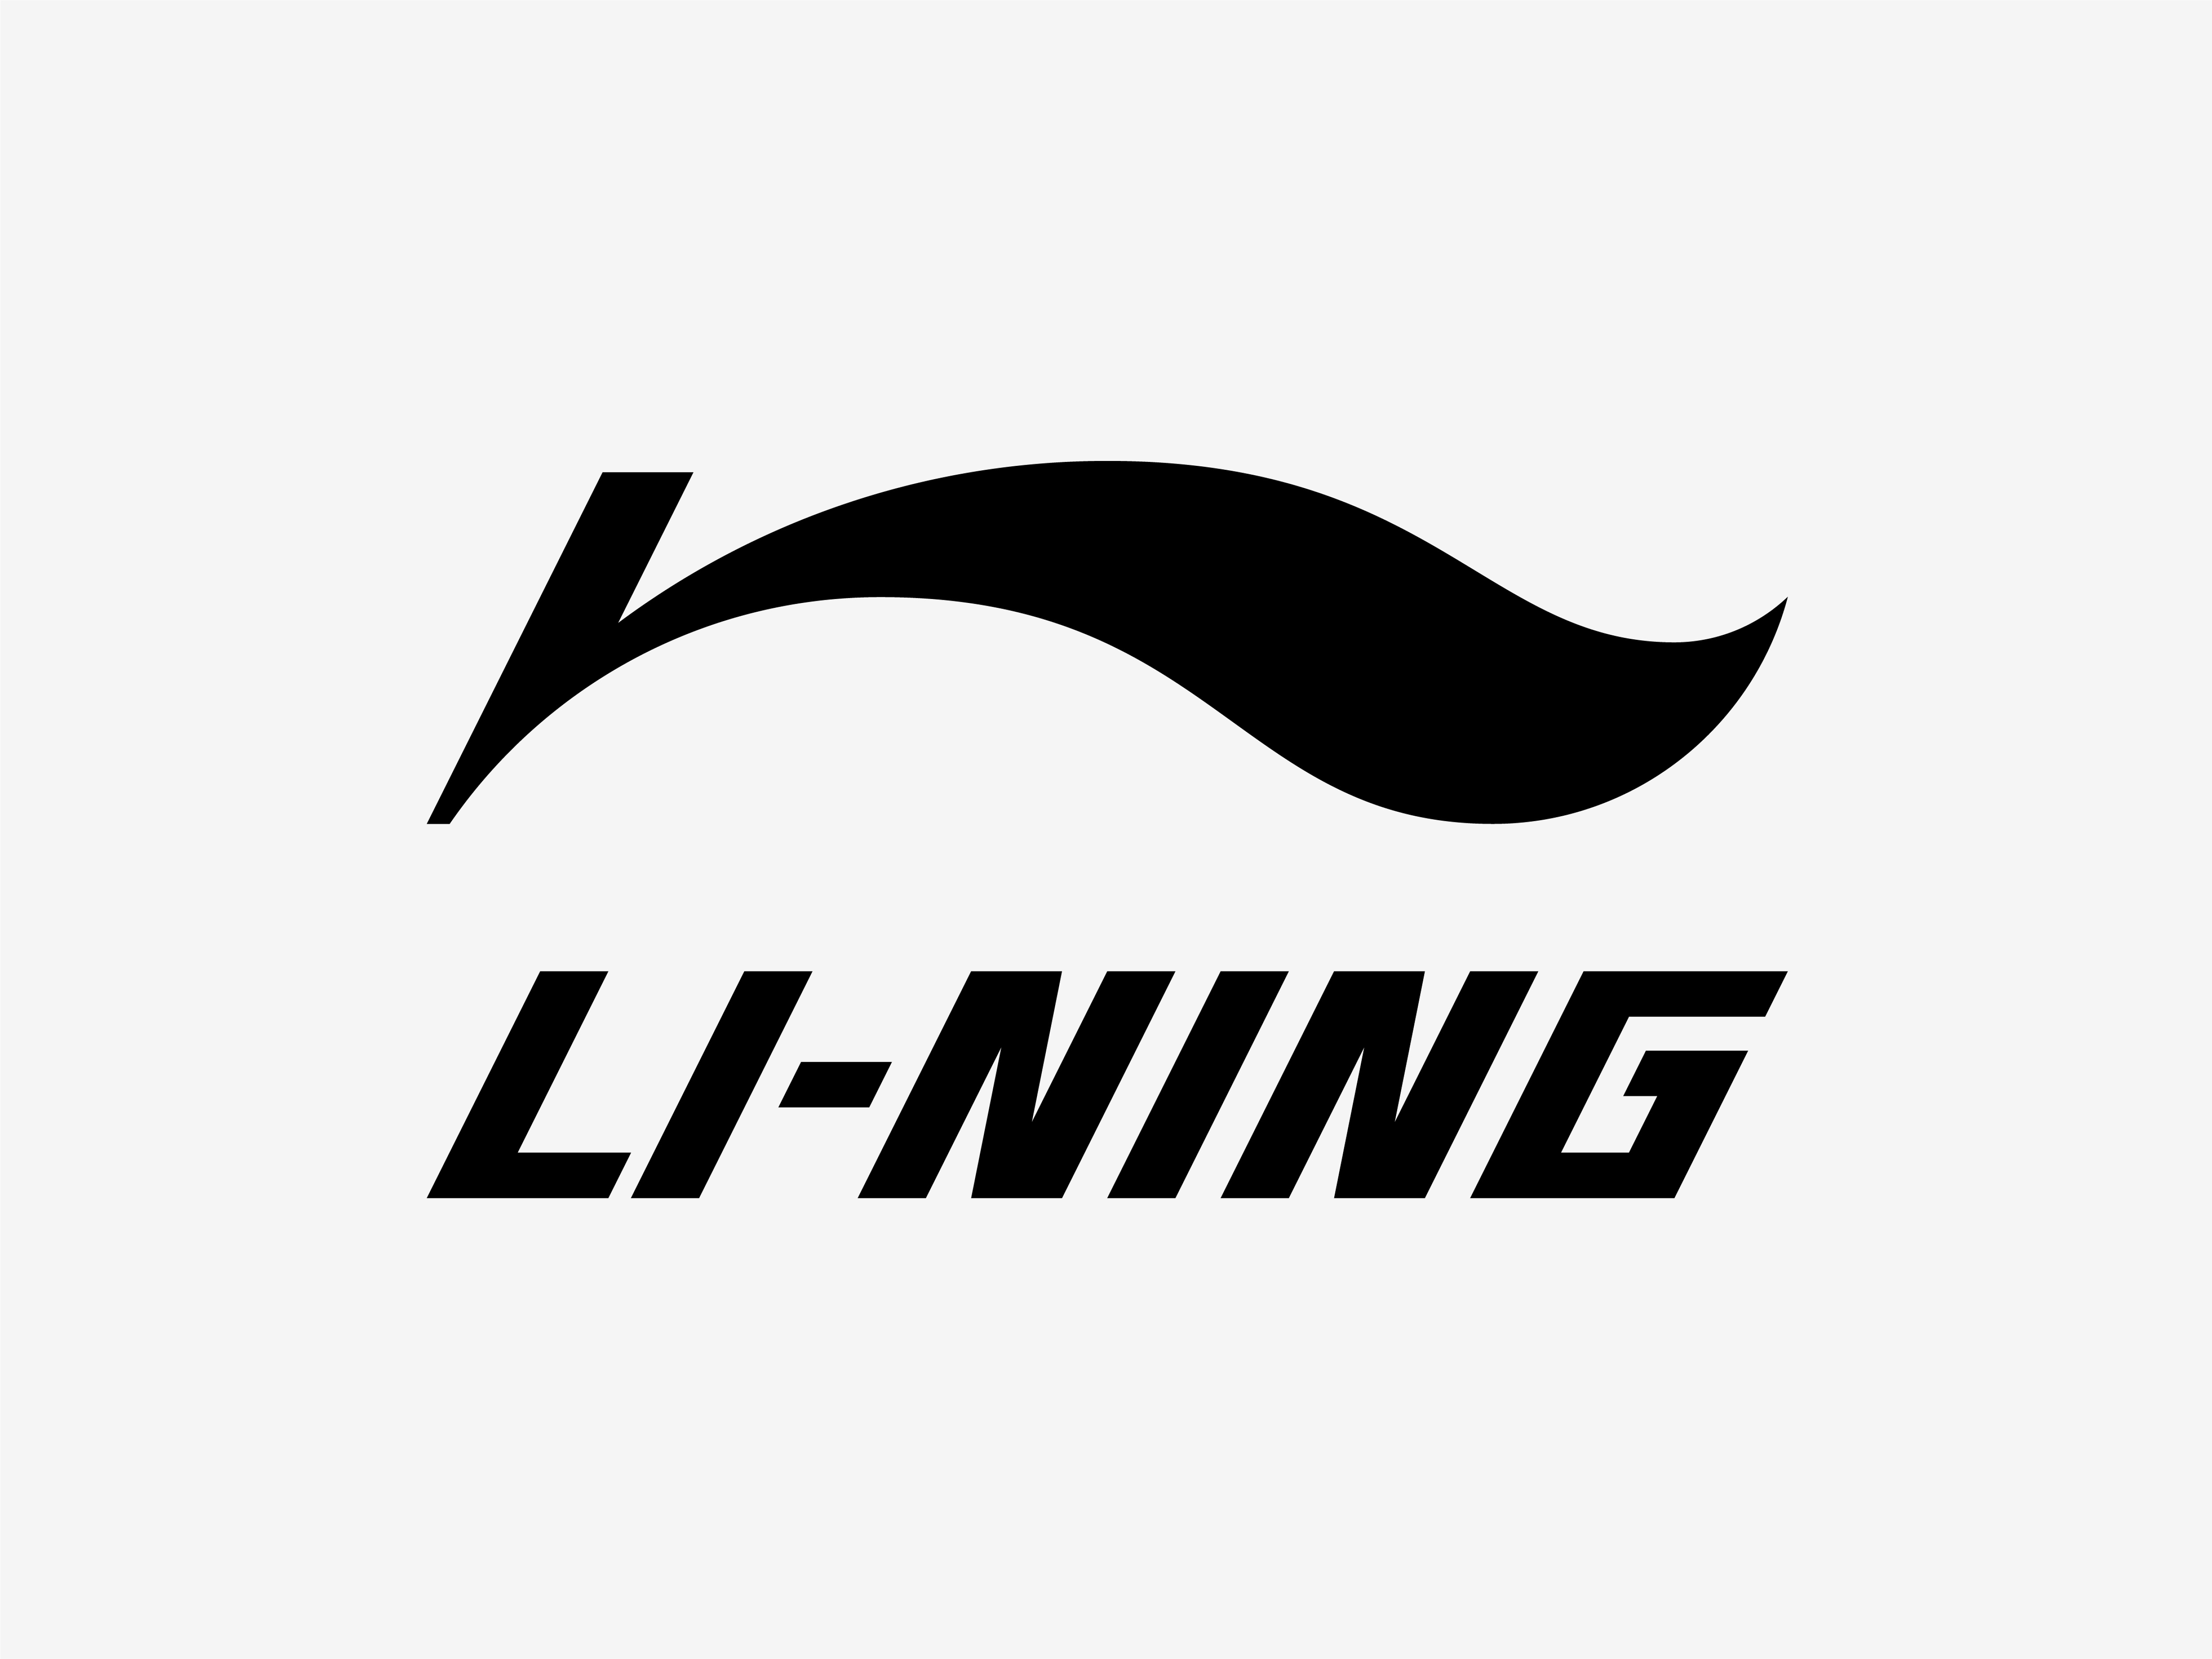 LI-NING 1990 — A Black Cover Design, Inc.